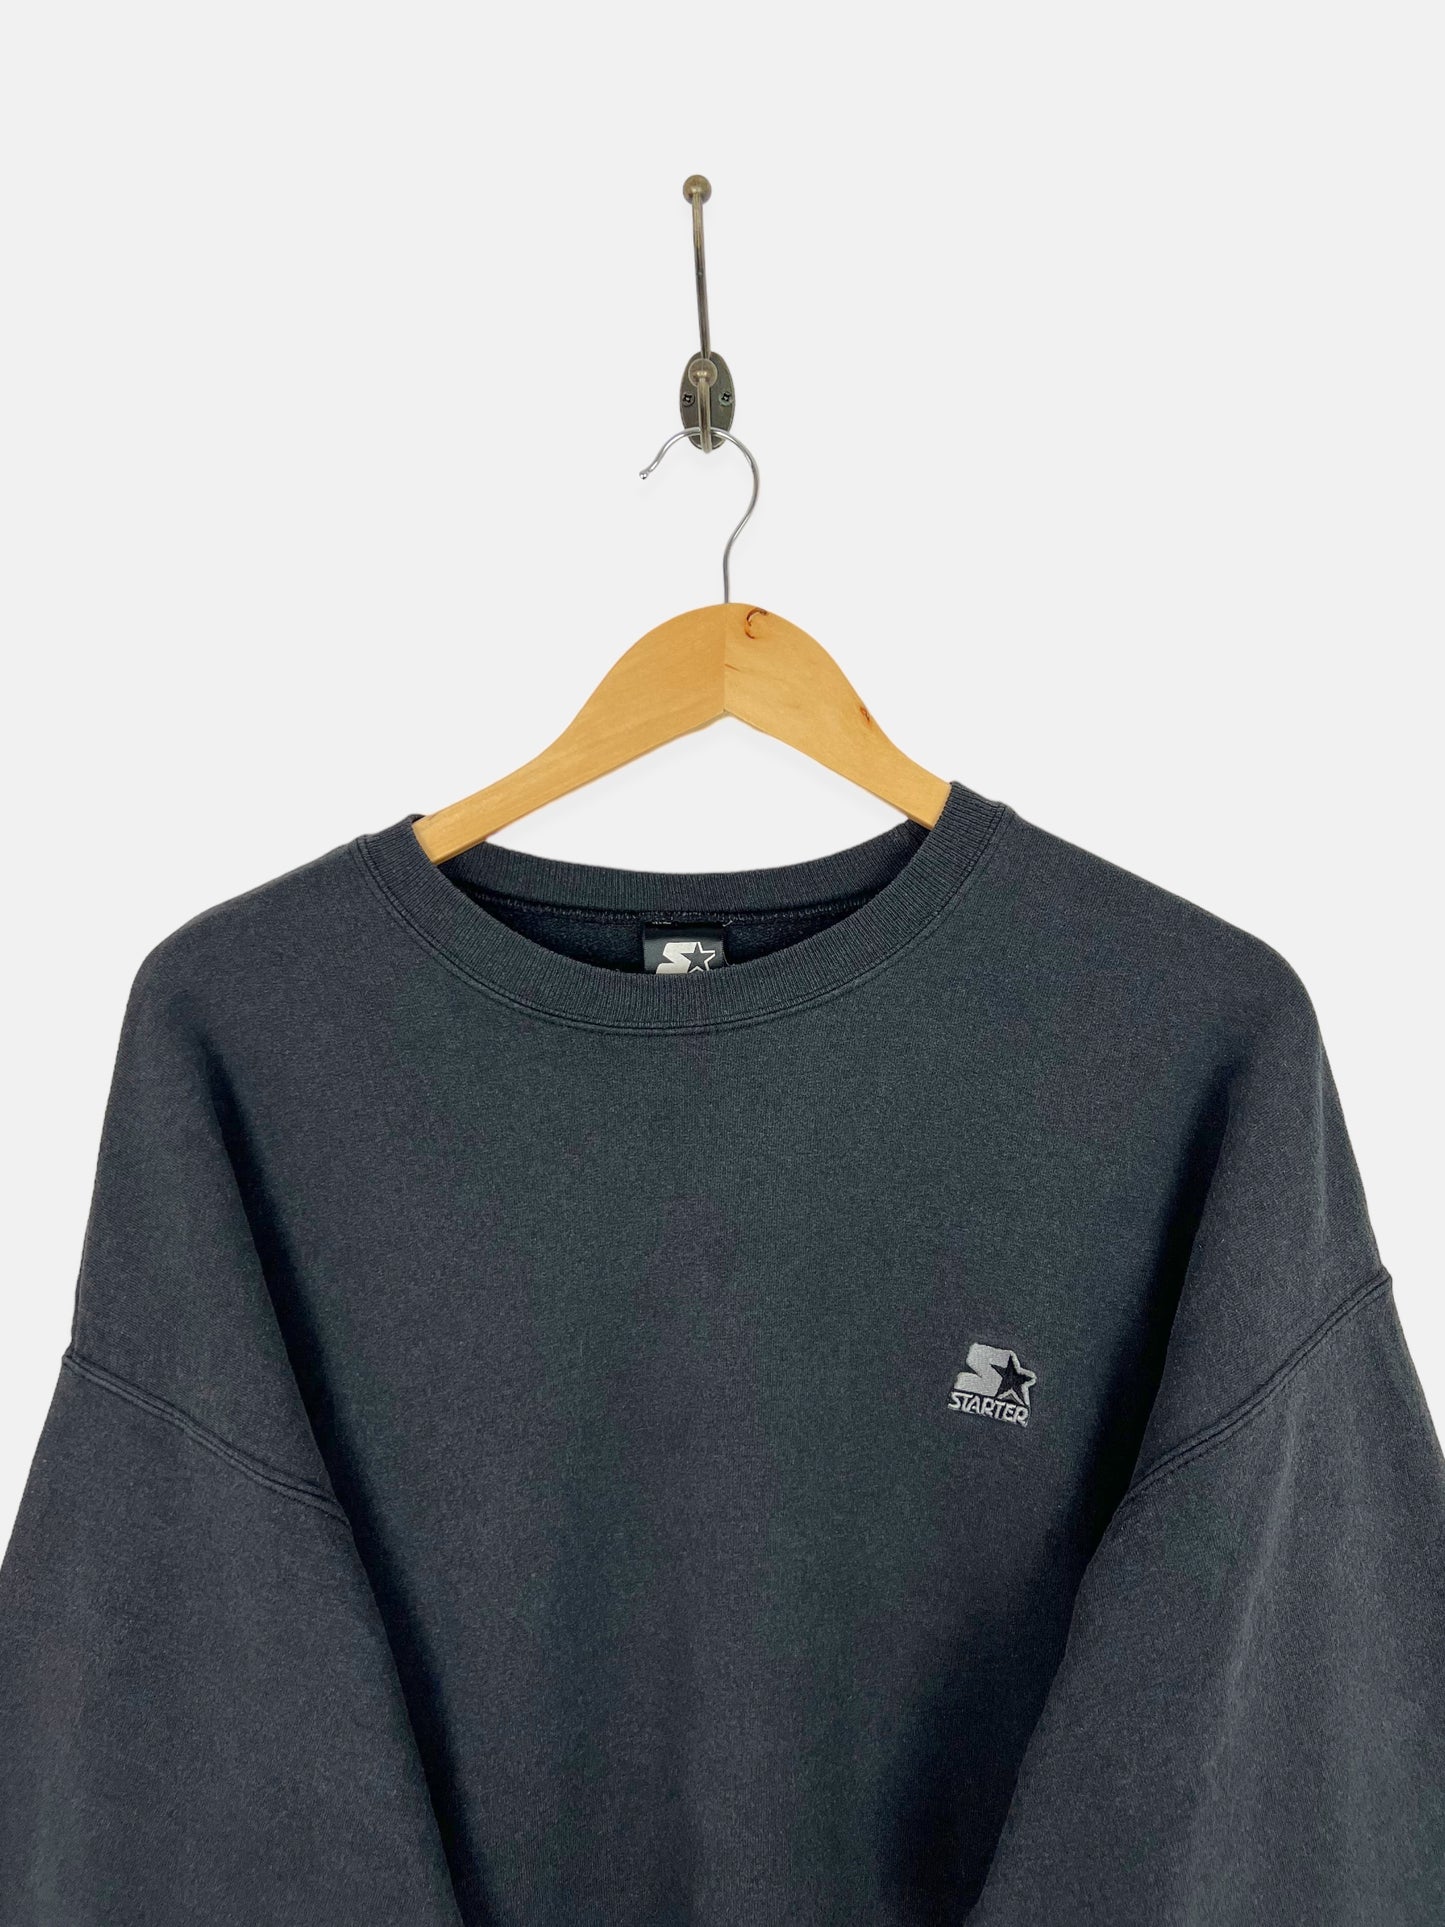 90's Starter Embroidered Vintage Sweatshirt Size L-XL